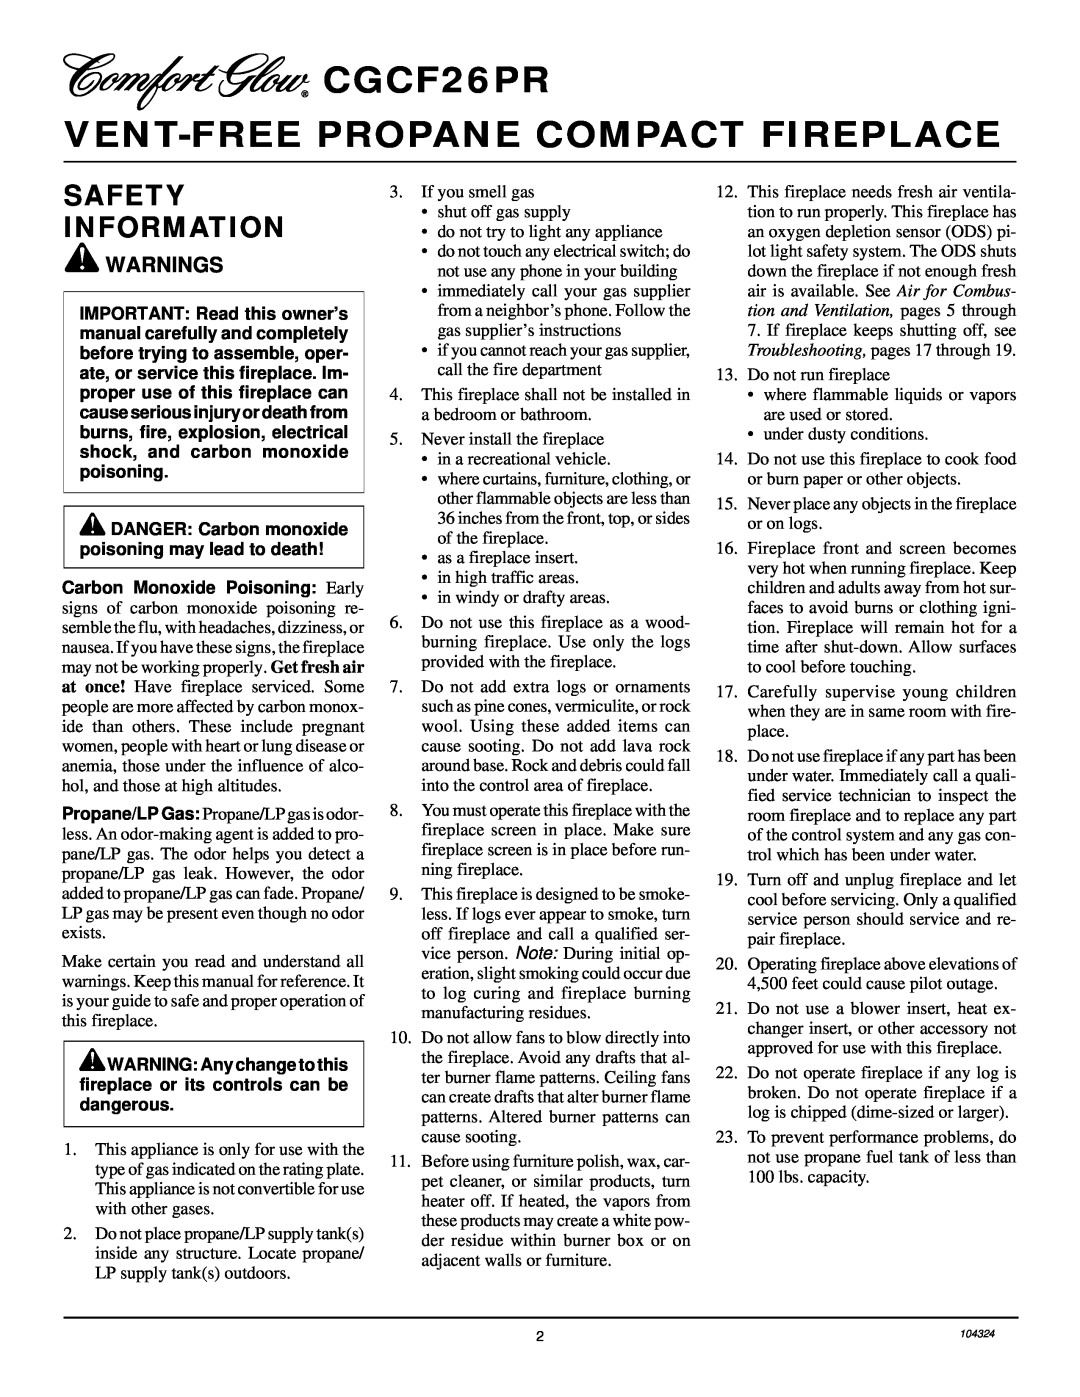 Desa installation manual CGCF26PR VENT-FREEPROPANE COMPACT FIREPLACE, Safety Information, Warnings 